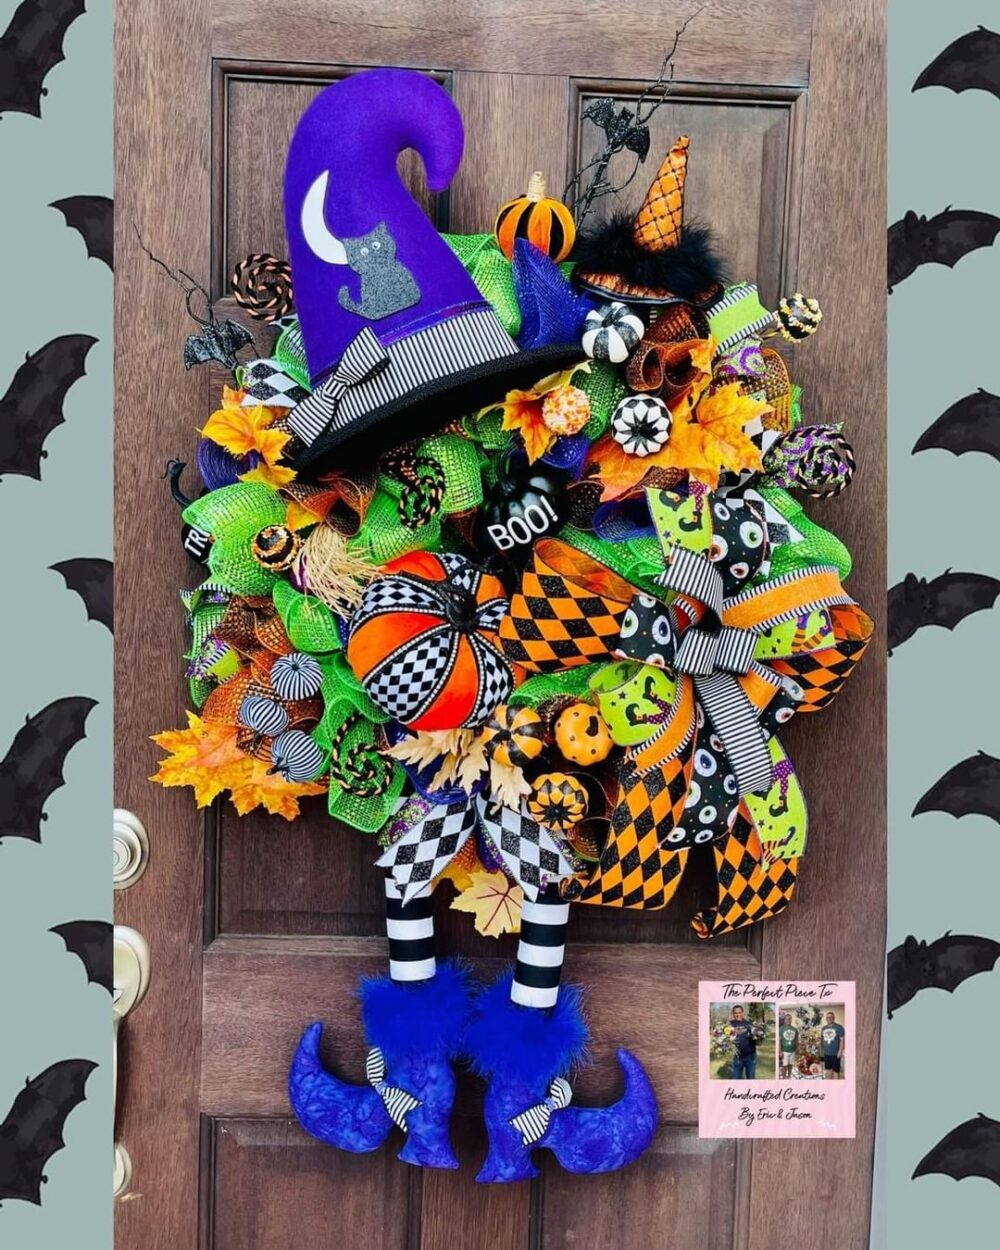 150 Spooktastic Halloween Wreaths Ideas